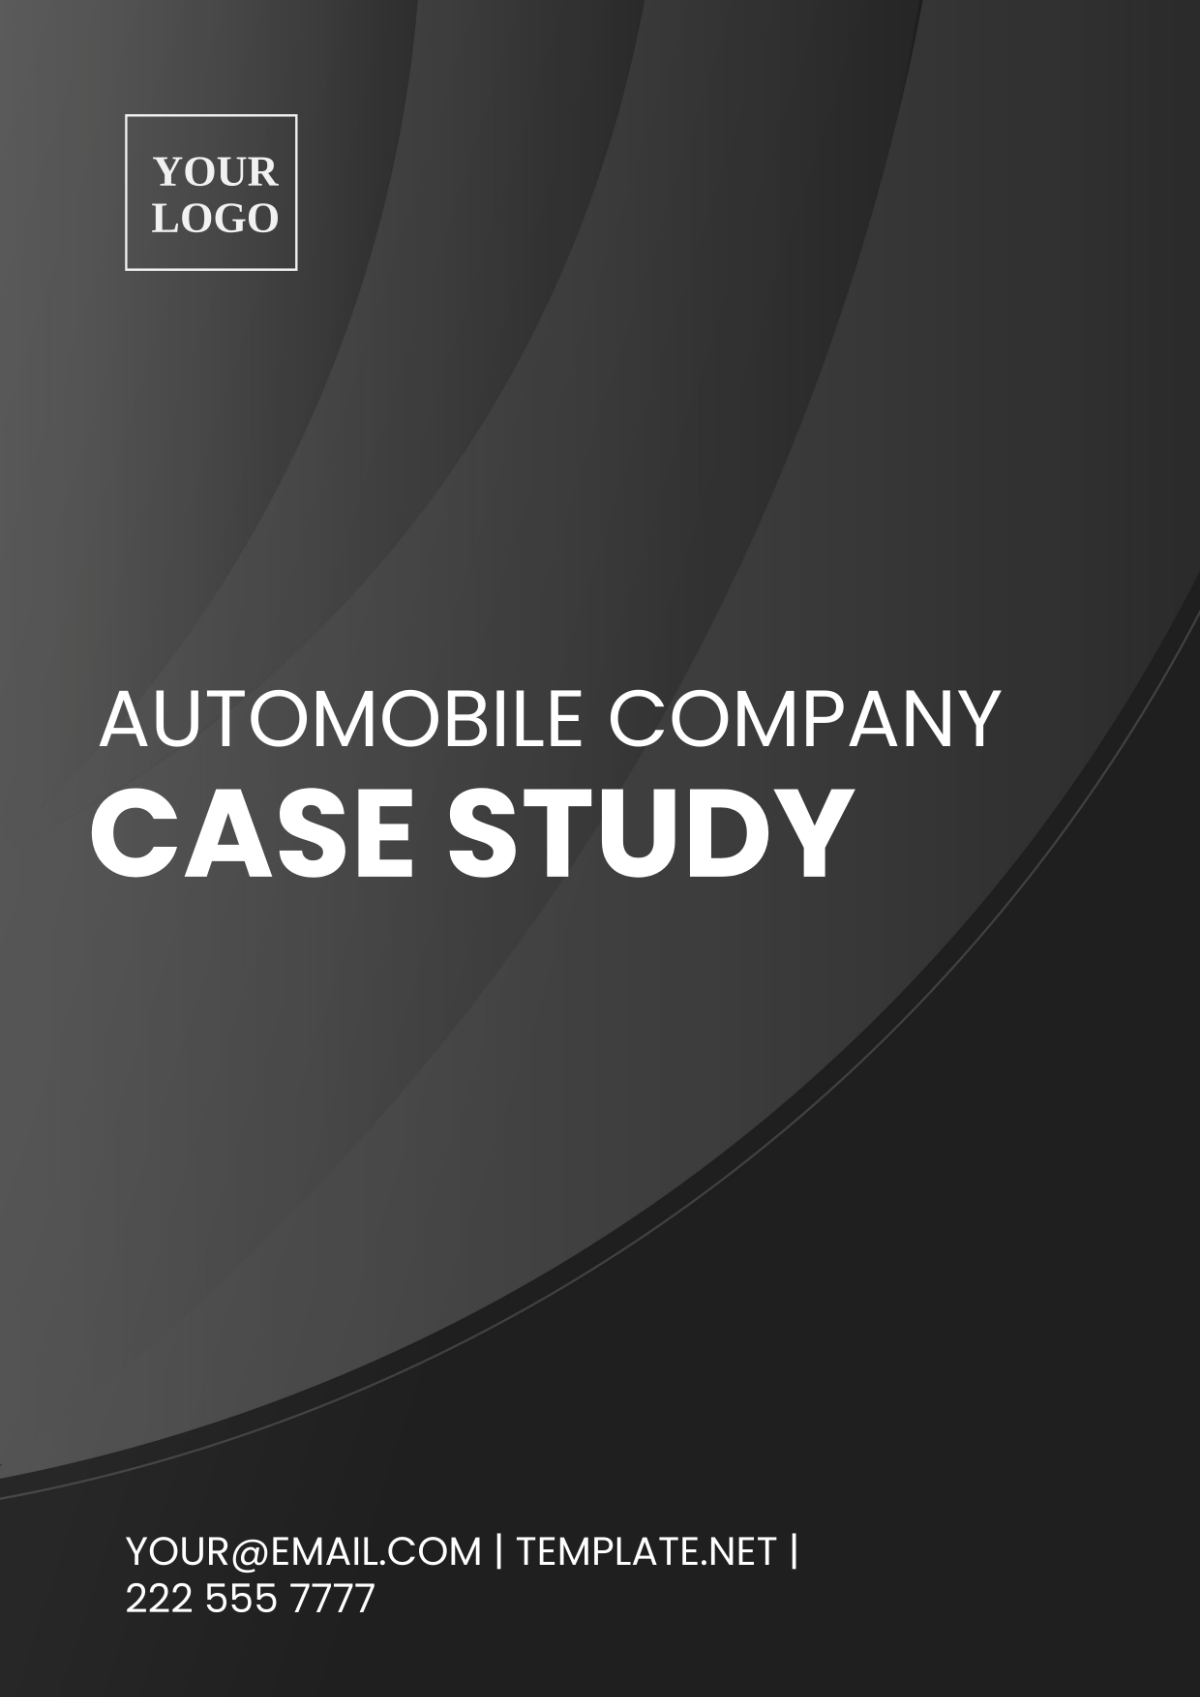 Automobile Company Case Study Template